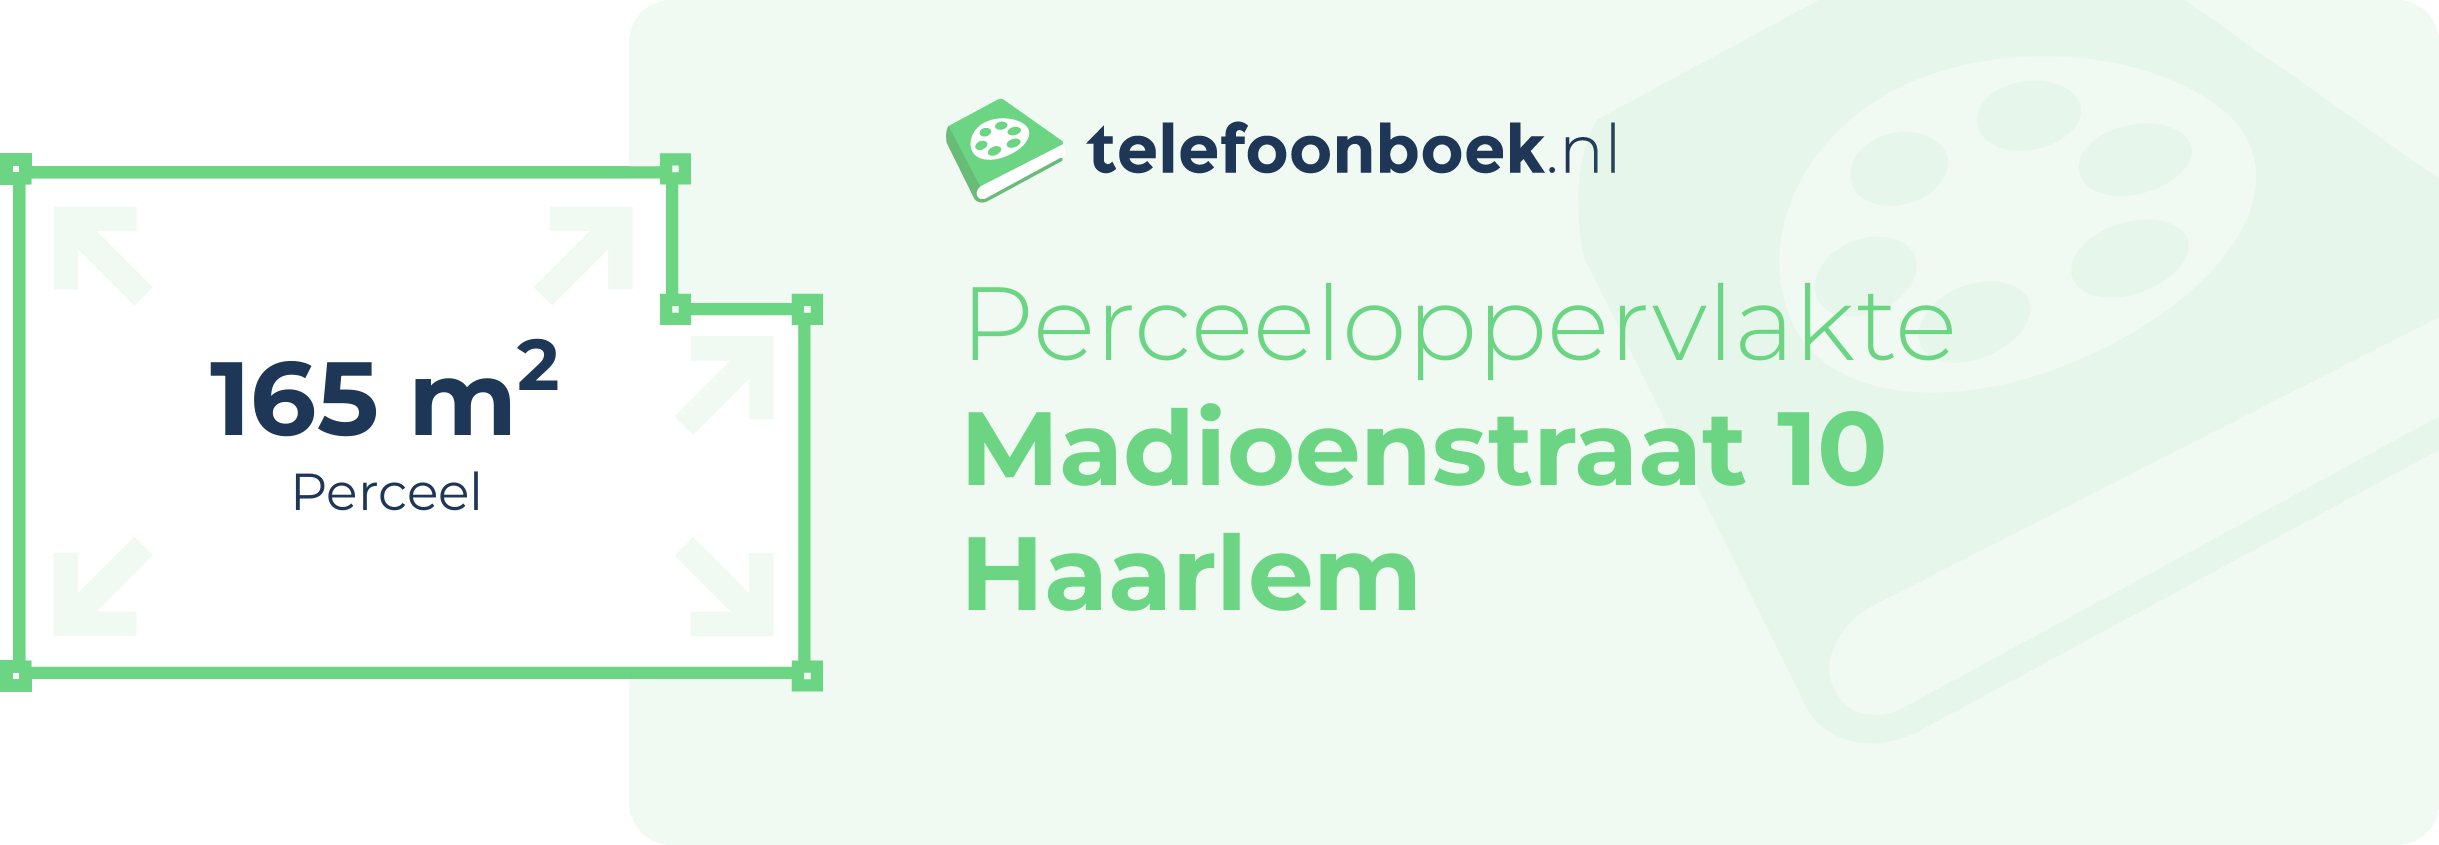 Perceeloppervlakte Madioenstraat 10 Haarlem